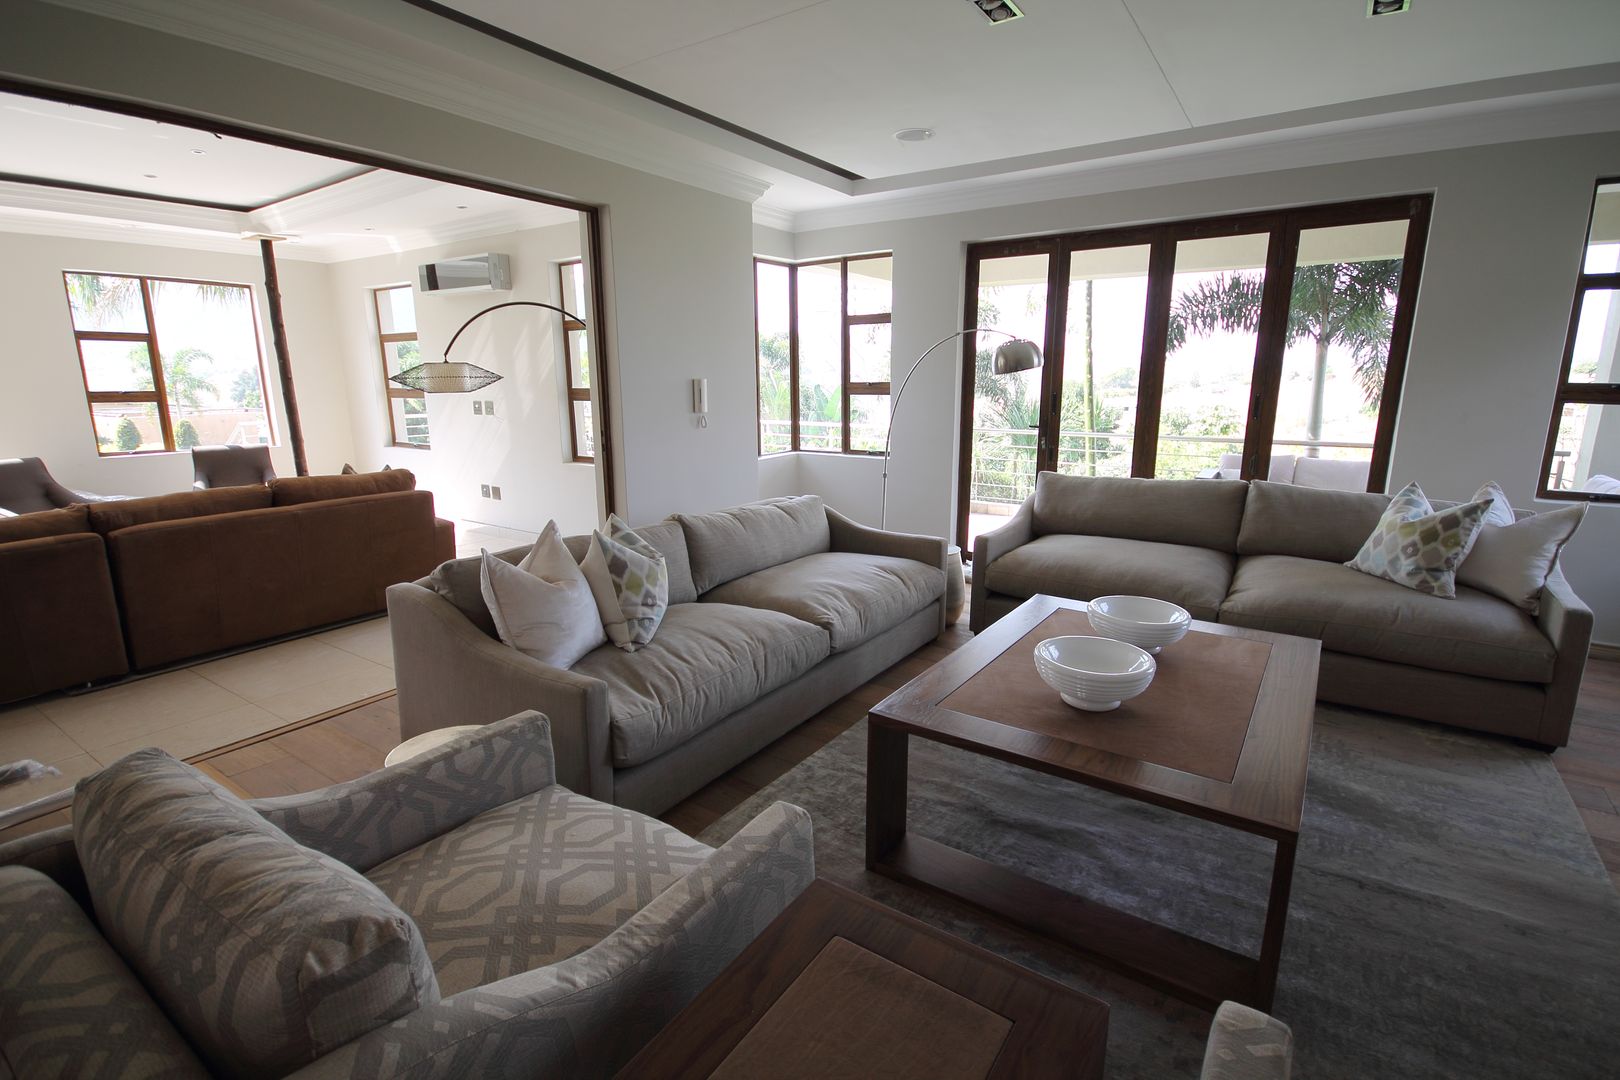 House Swaziland, Principia Design Principia Design Salas modernas